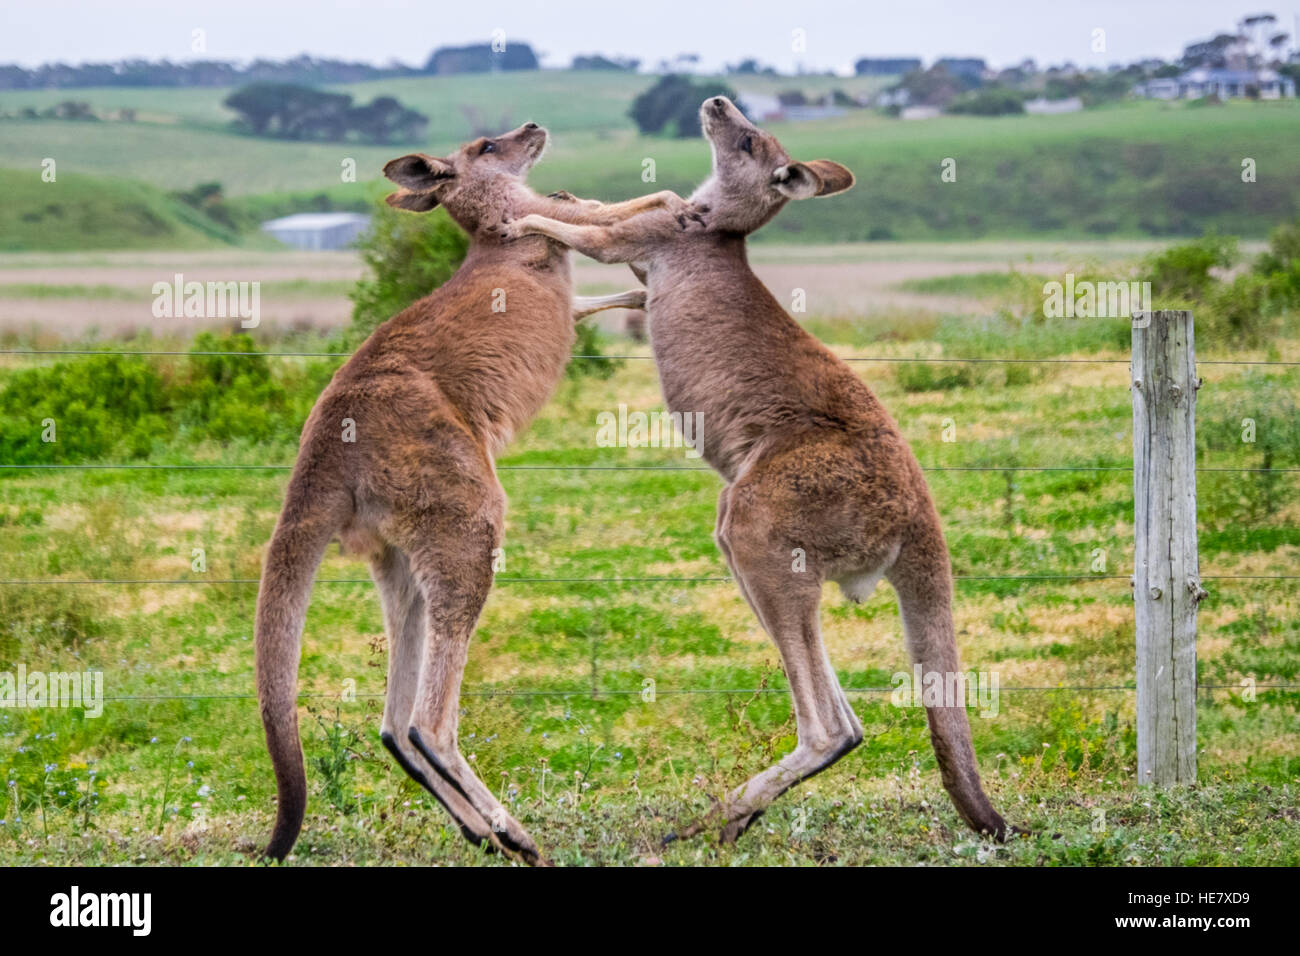 Zwei Kängurus 'Boxing' Miteinander, Victoria, Australien Stockfoto